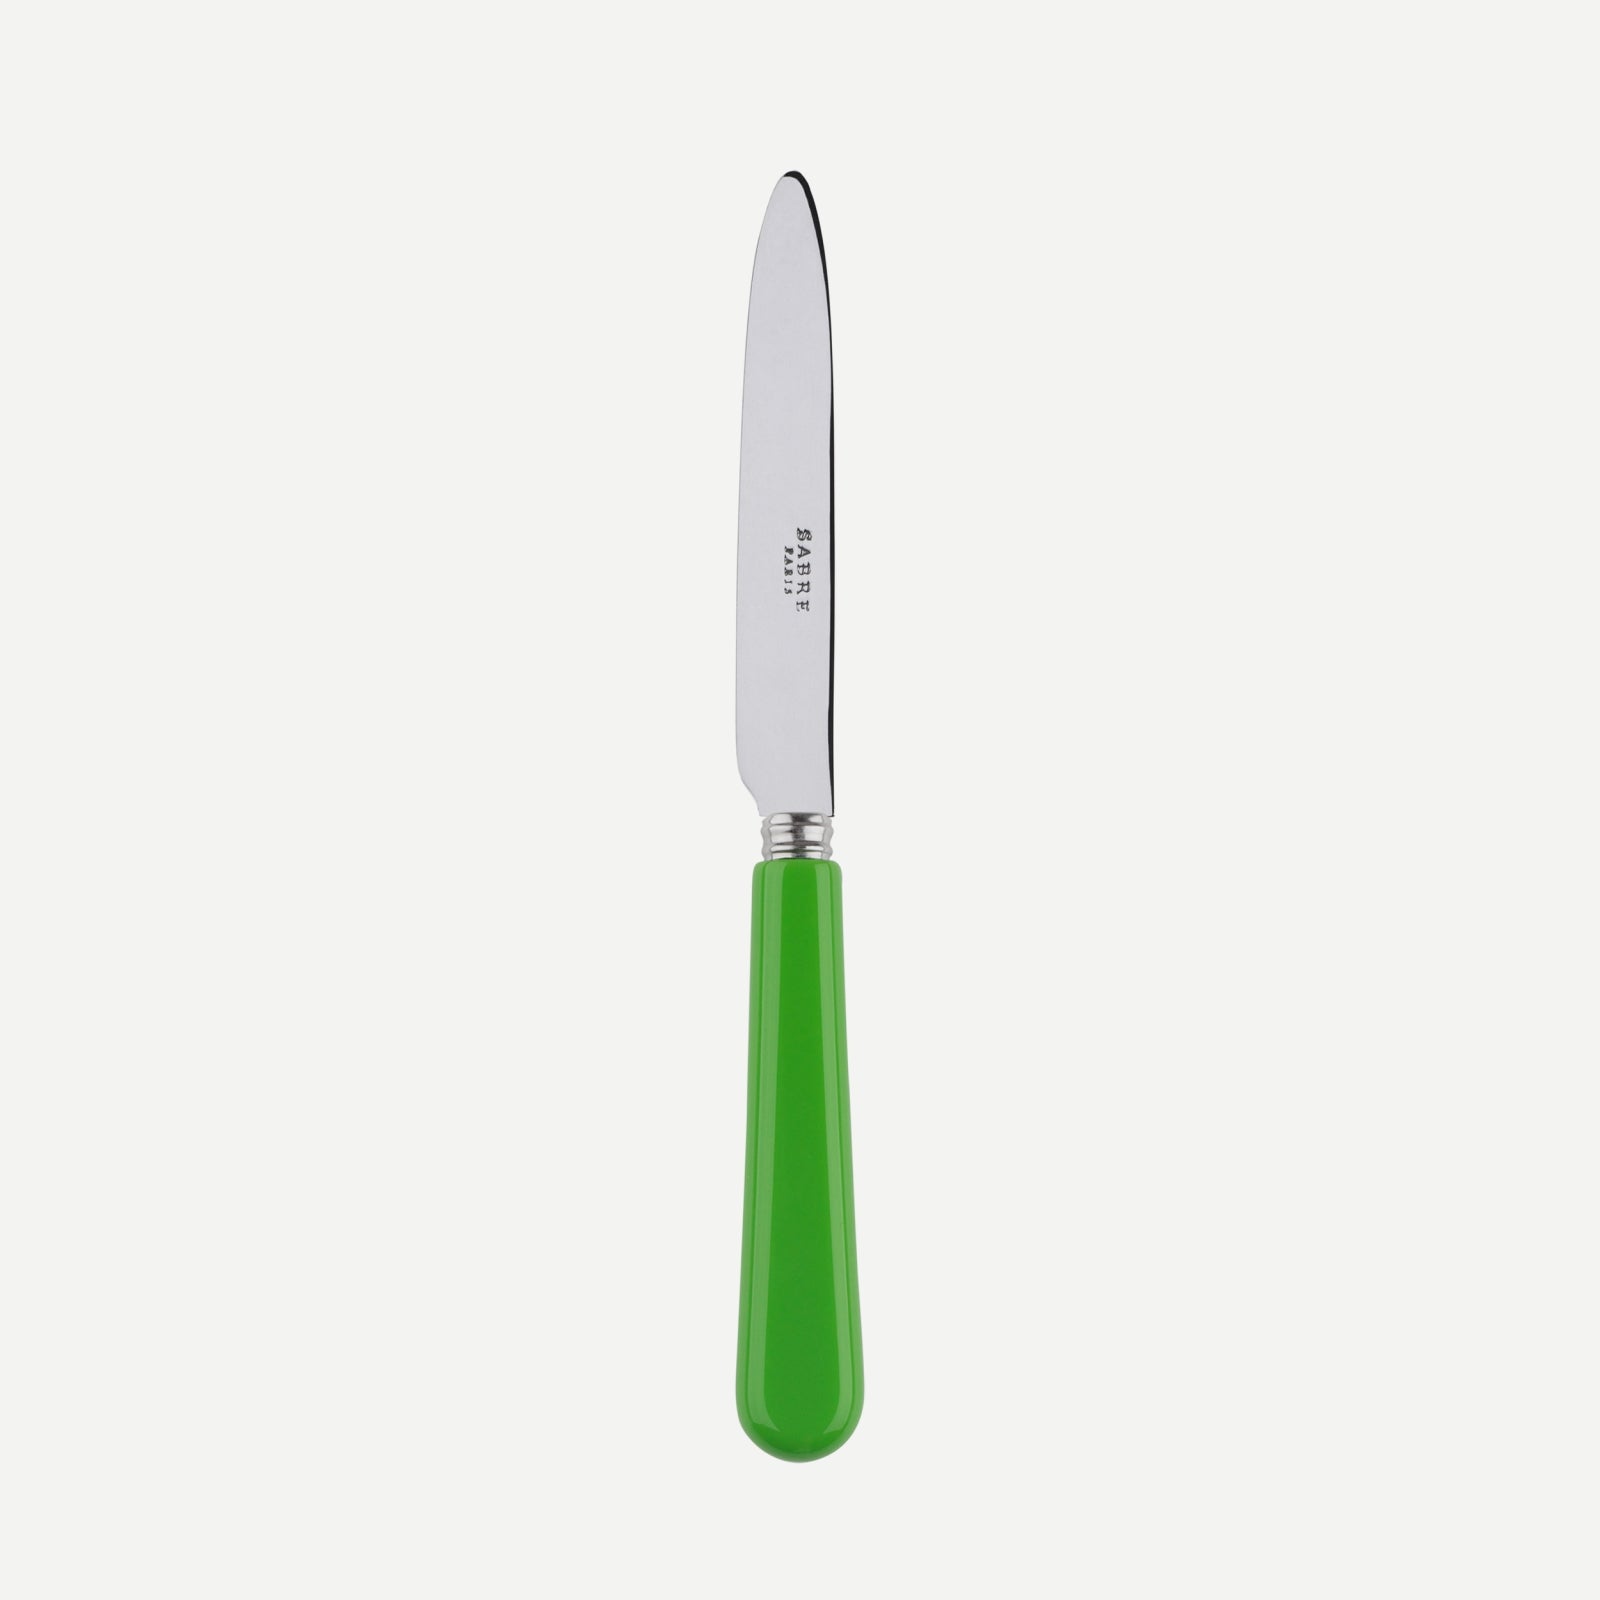 Dessert knife - Pop unis - Streaming green